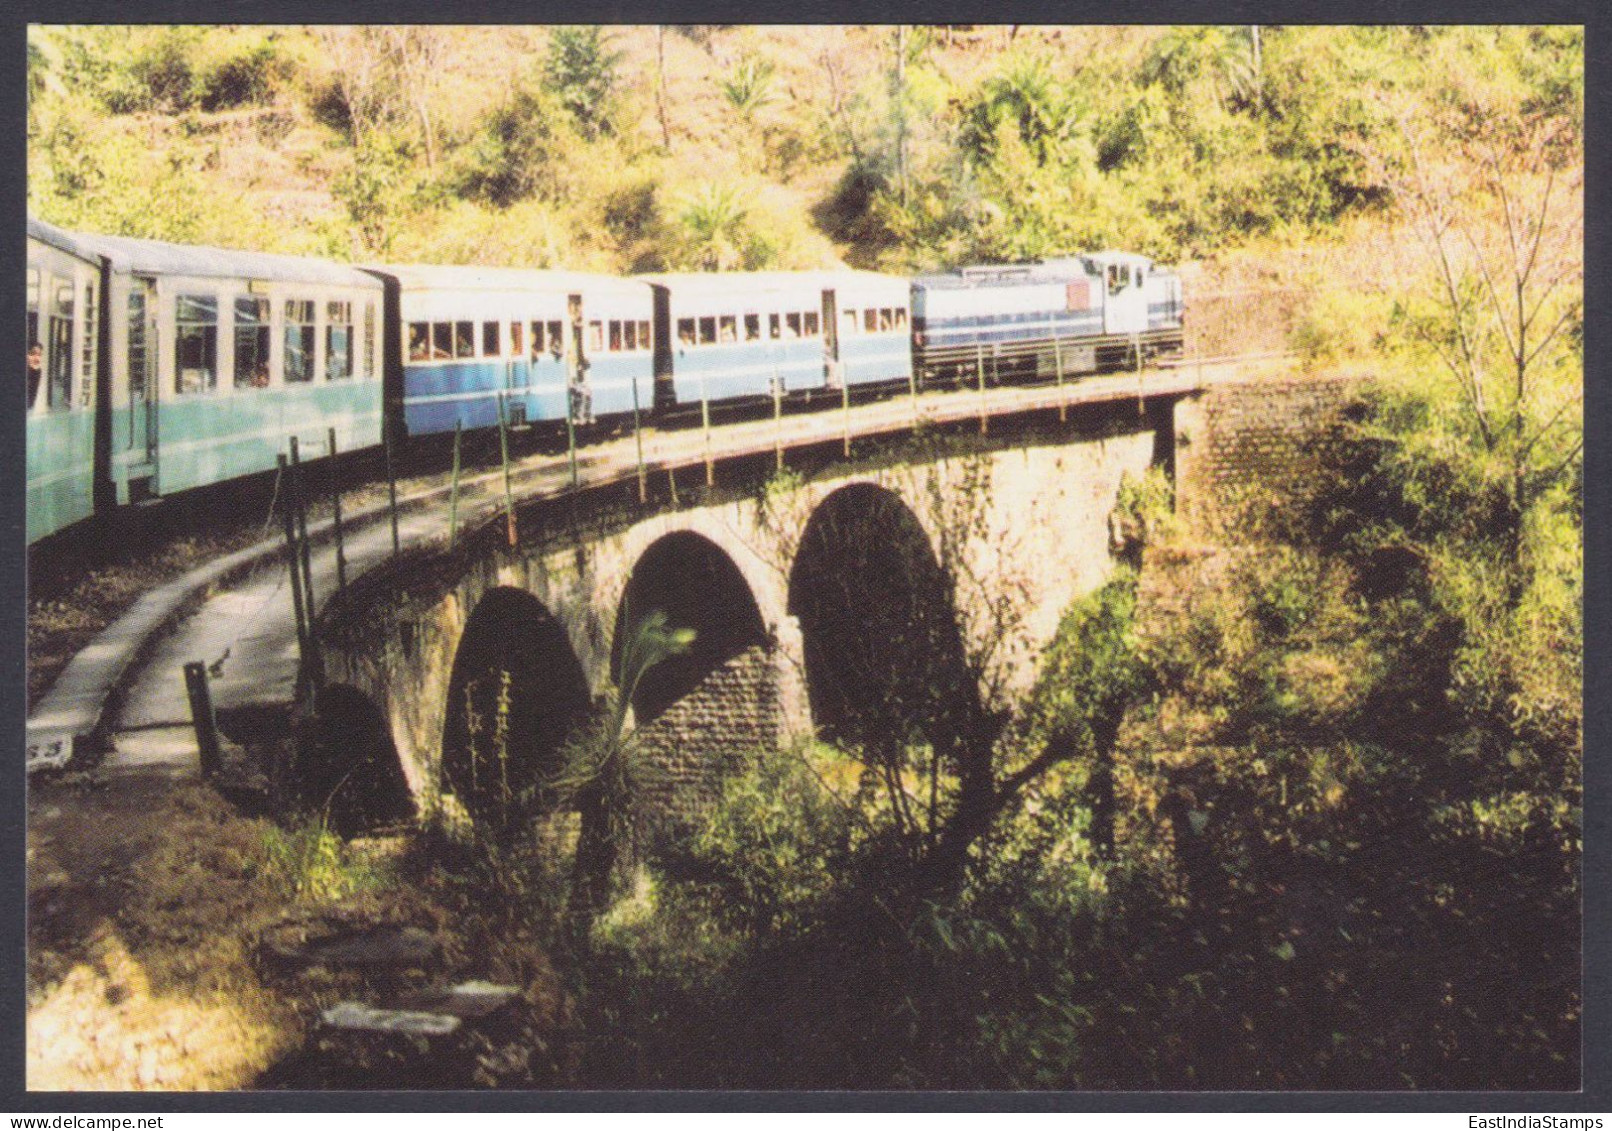 Inde India Mint Postcard Kalka-Shimla Railway, UNESCO World Heritage SIte, Railways, Train Trains, Mountain Stone Bridge - Inde